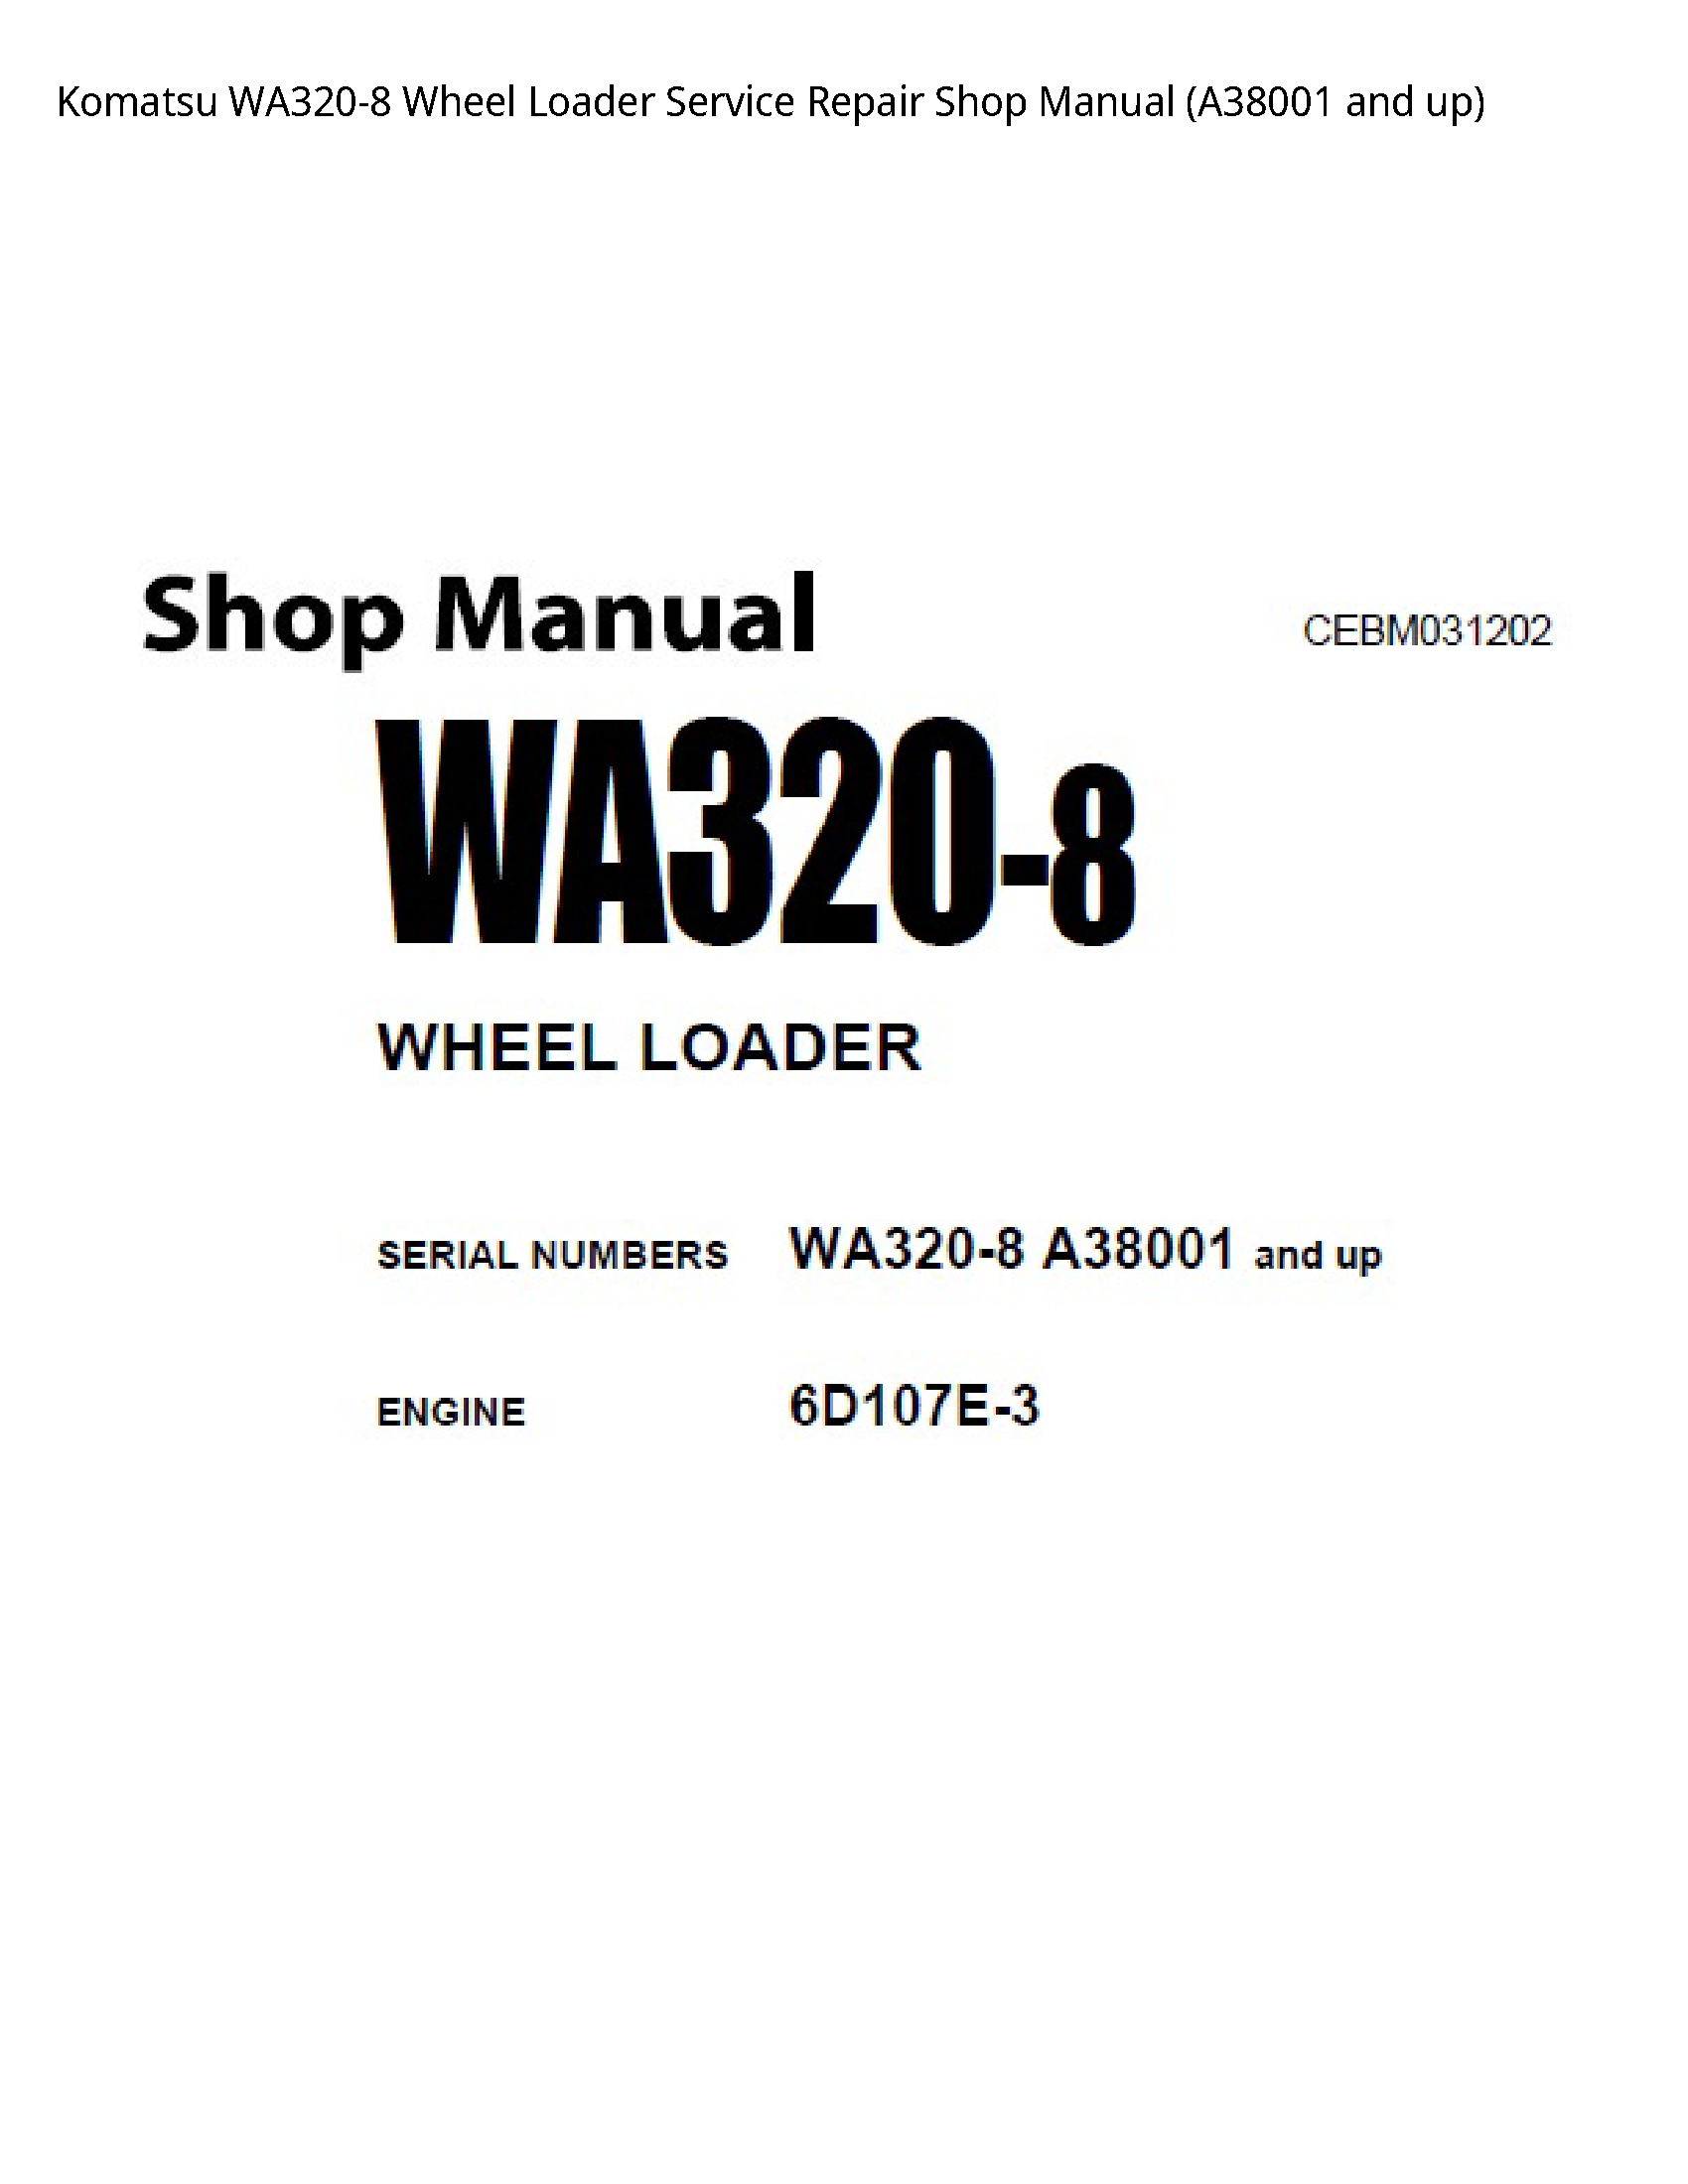 KOMATSU WA320-8 Wheel Loader manual